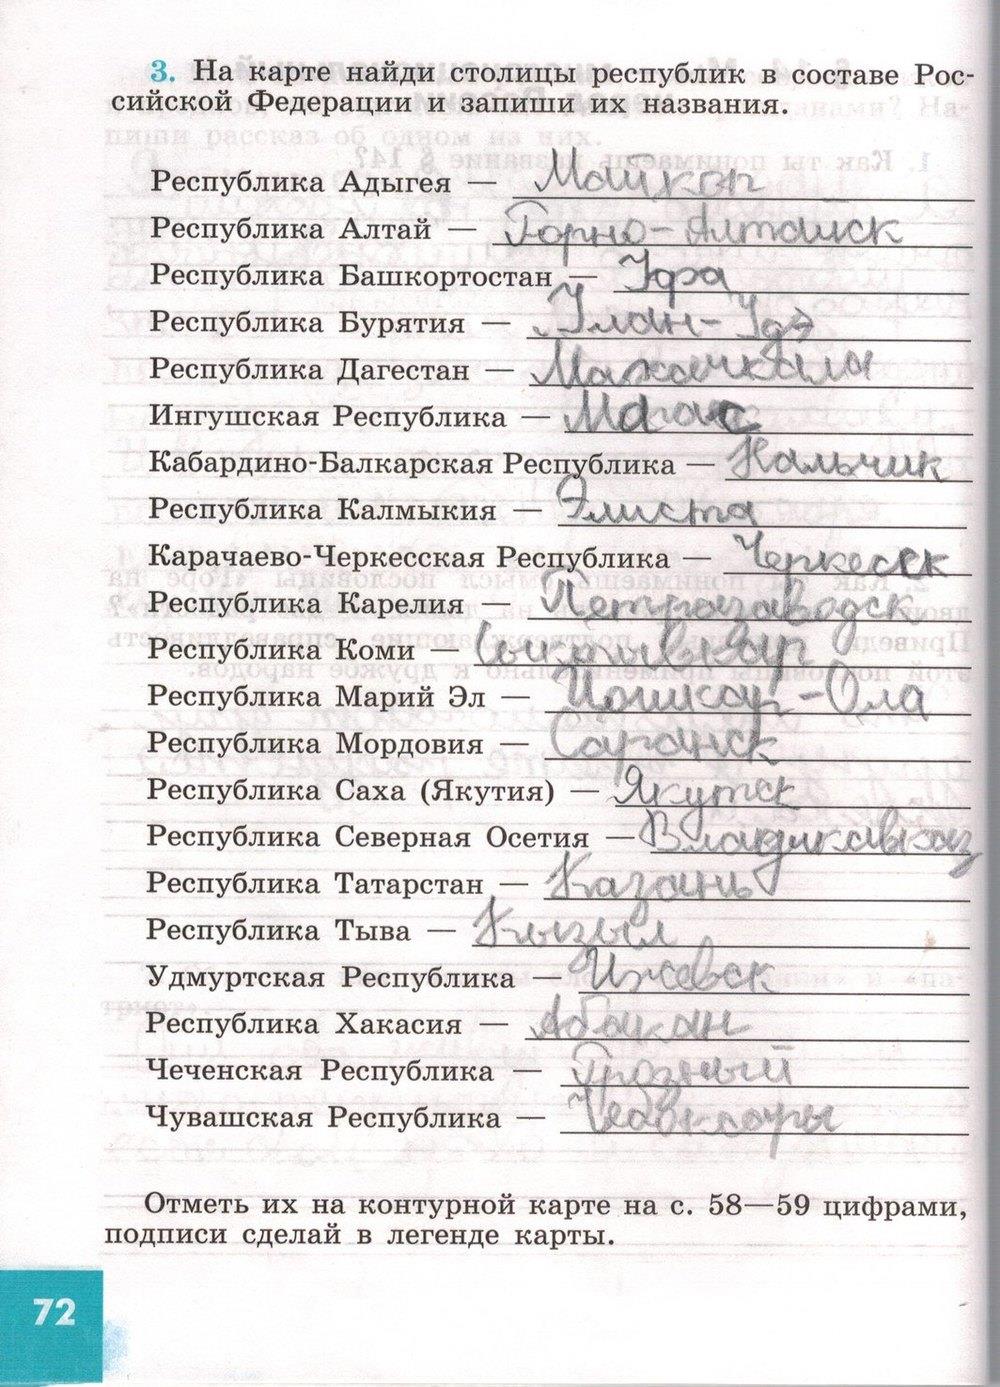 гдз 5 класс рабочая тетрадь страница 72 обществознание Иванова, Хотеенкова